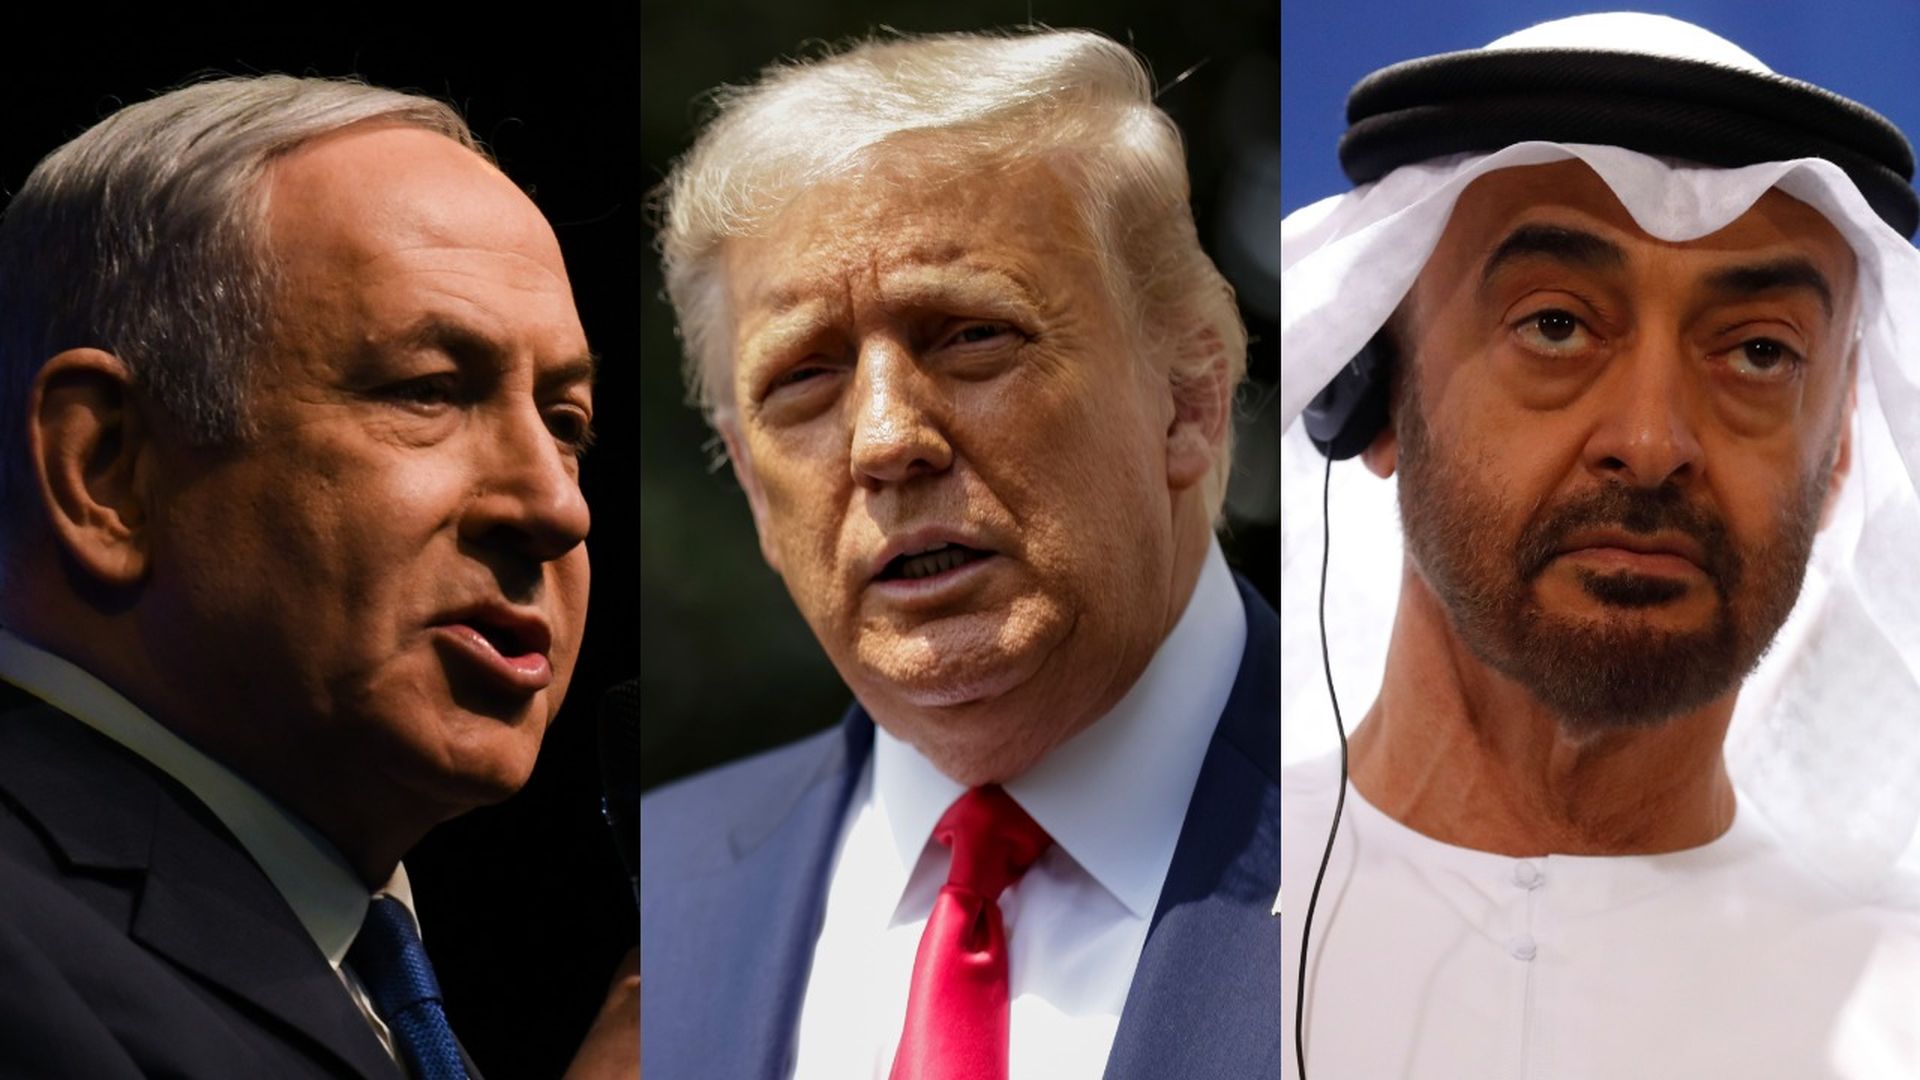 Netanyahu, Trump and MBZ